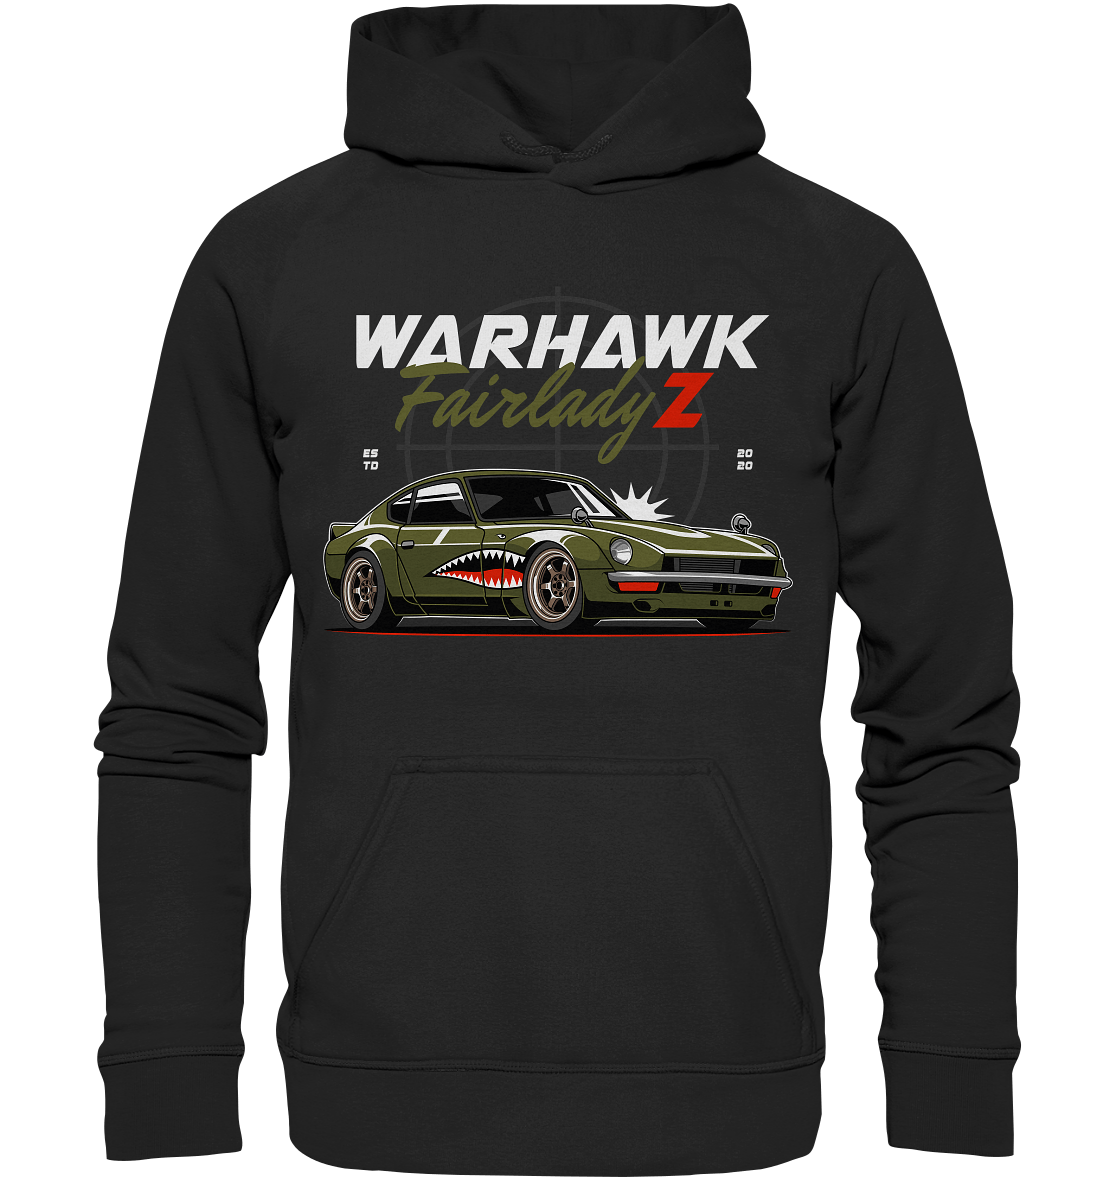 Warhawk 240Z - Basic Unisex Hoodie XL - MotoMerch.de